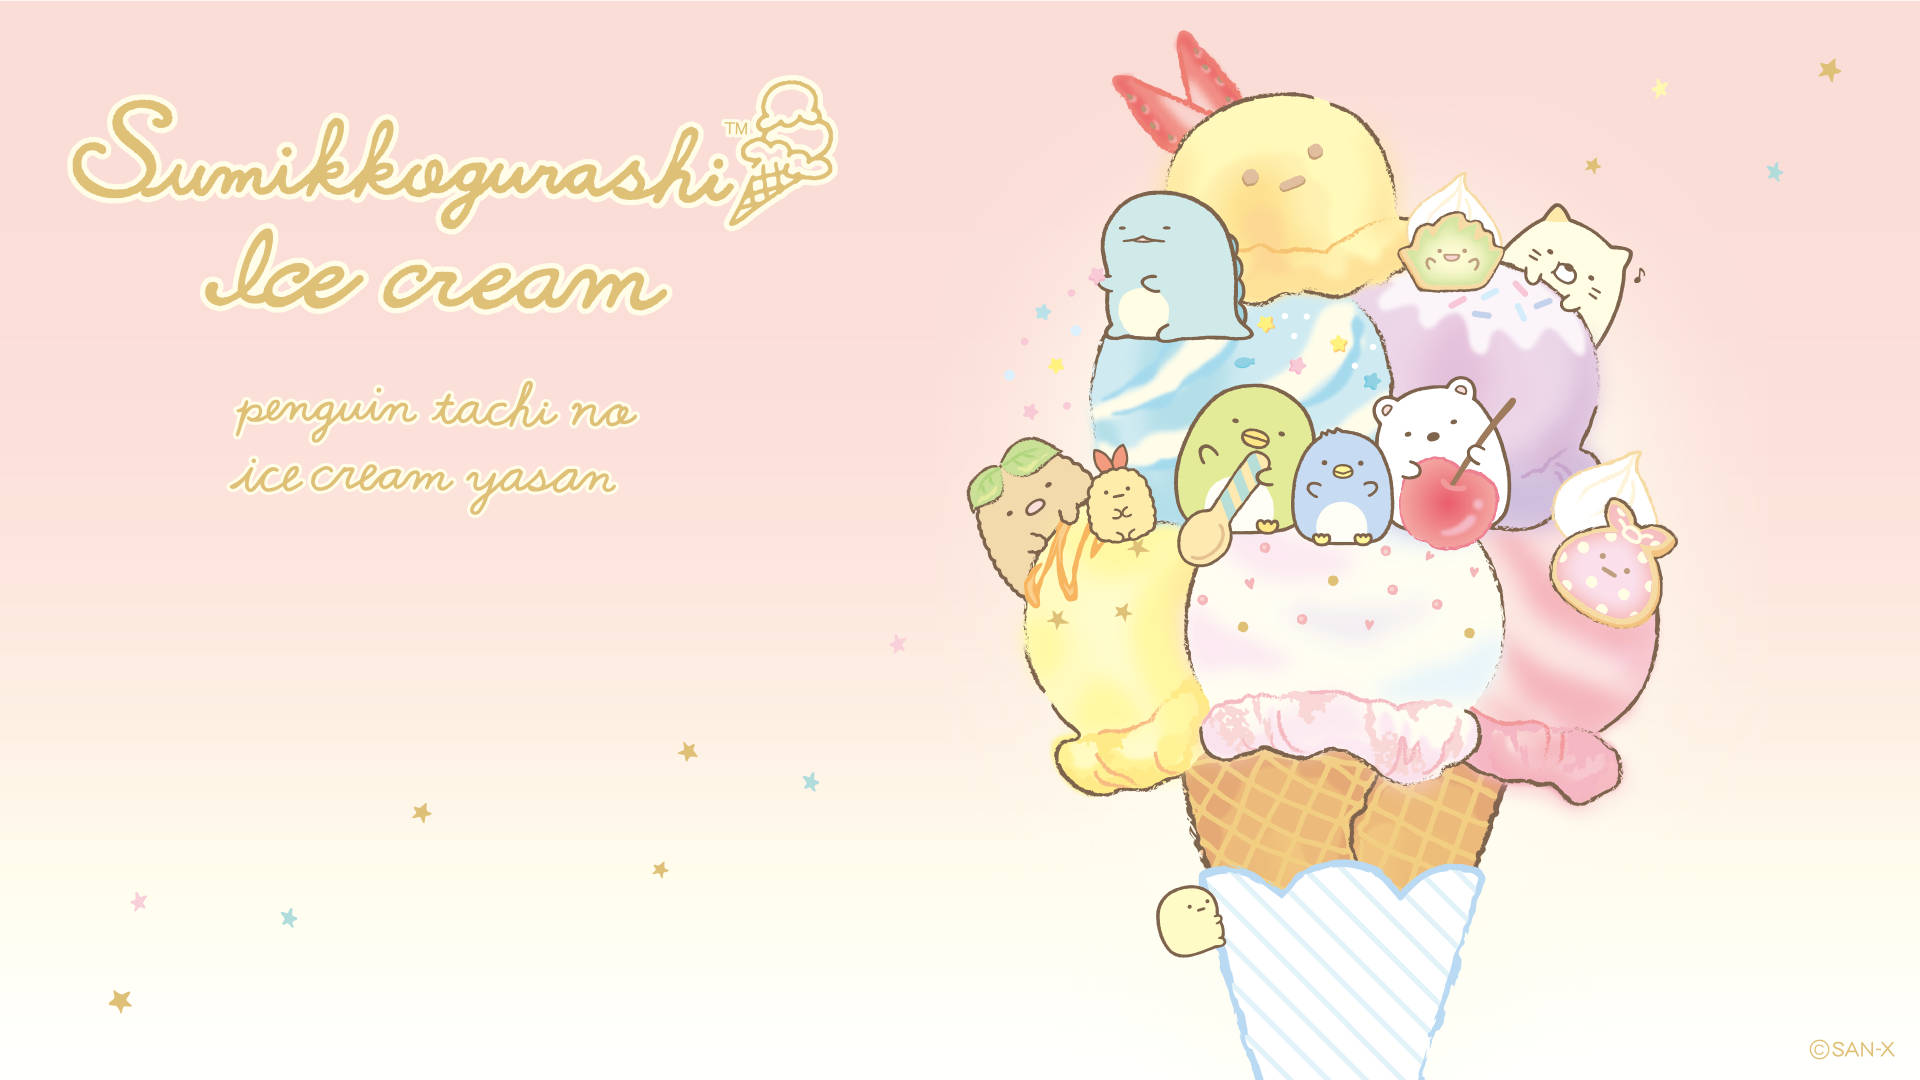 Sumikko Gurashi On Ice Cream Cone